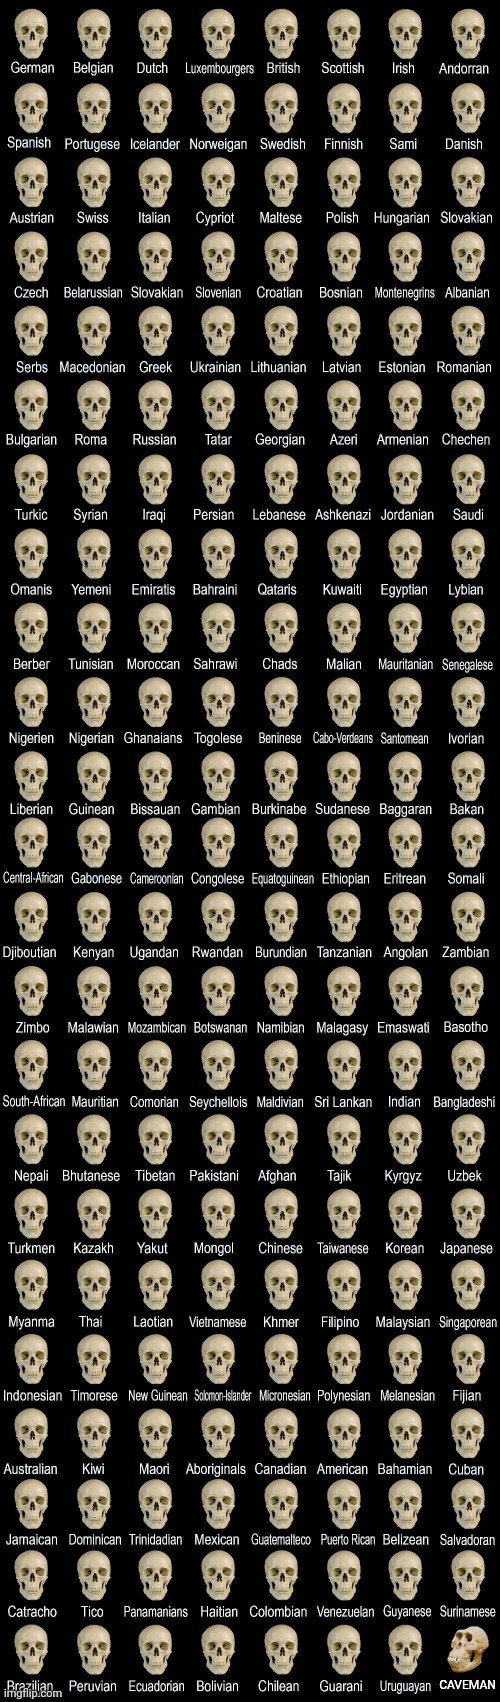 Deformed skull | CAVEMAN | image tagged in deformed skull | made w/ Imgflip meme maker